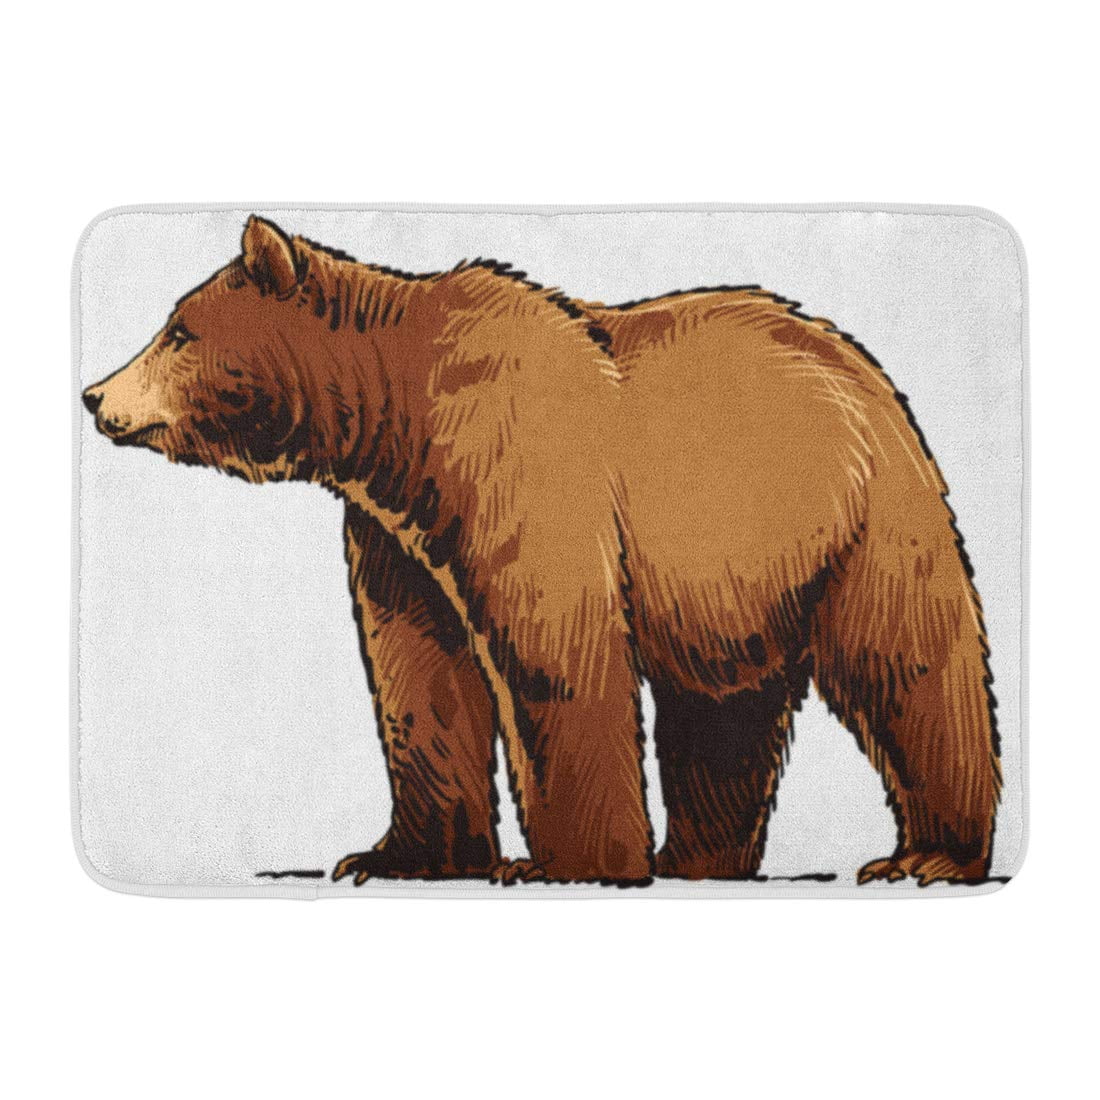 GODPOK Wild Brown Cartoon Grizzly Bear Animals Mascot Rug Doormat Bath Mat   inch 